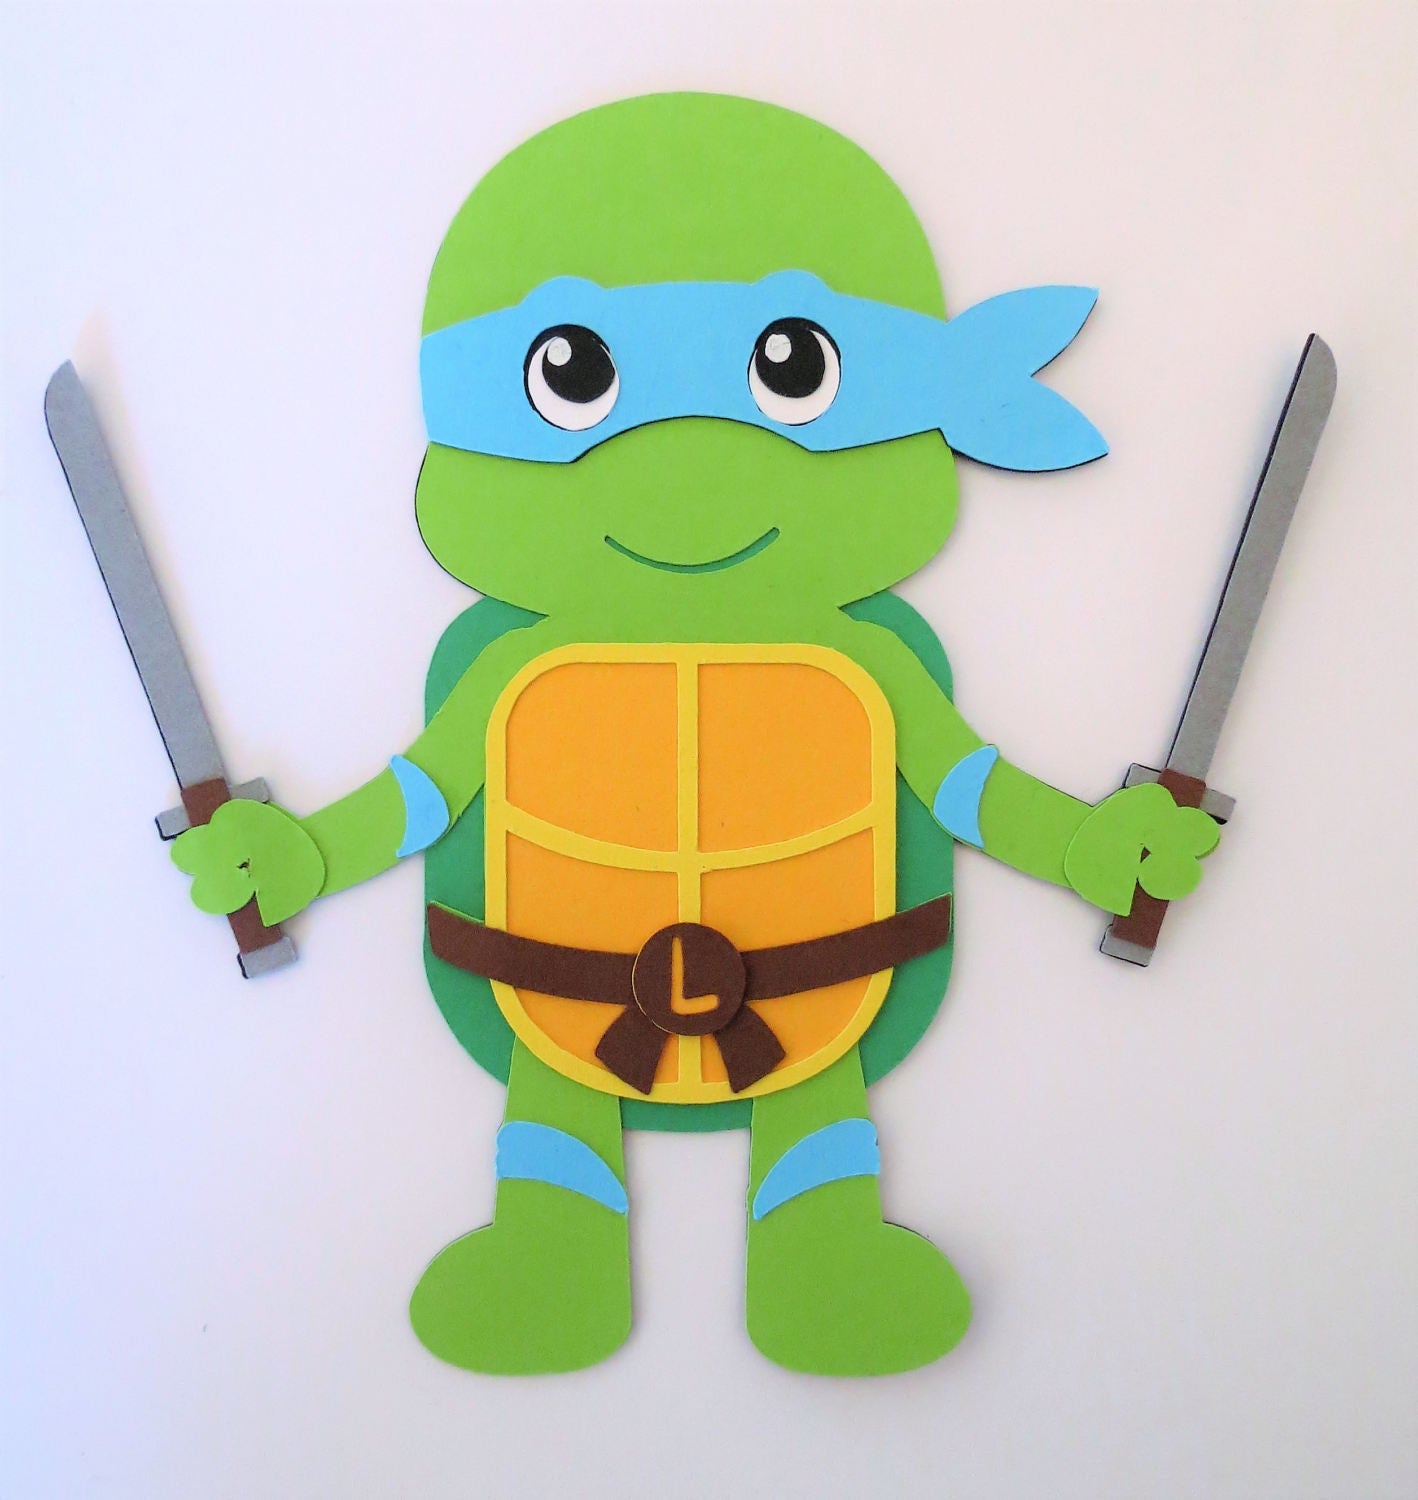  GRAPHICS & MORE Teenage Mutant Ninja Turtles Donatello Gift  Wrap Wrapping Paper Rolls : Health & Household